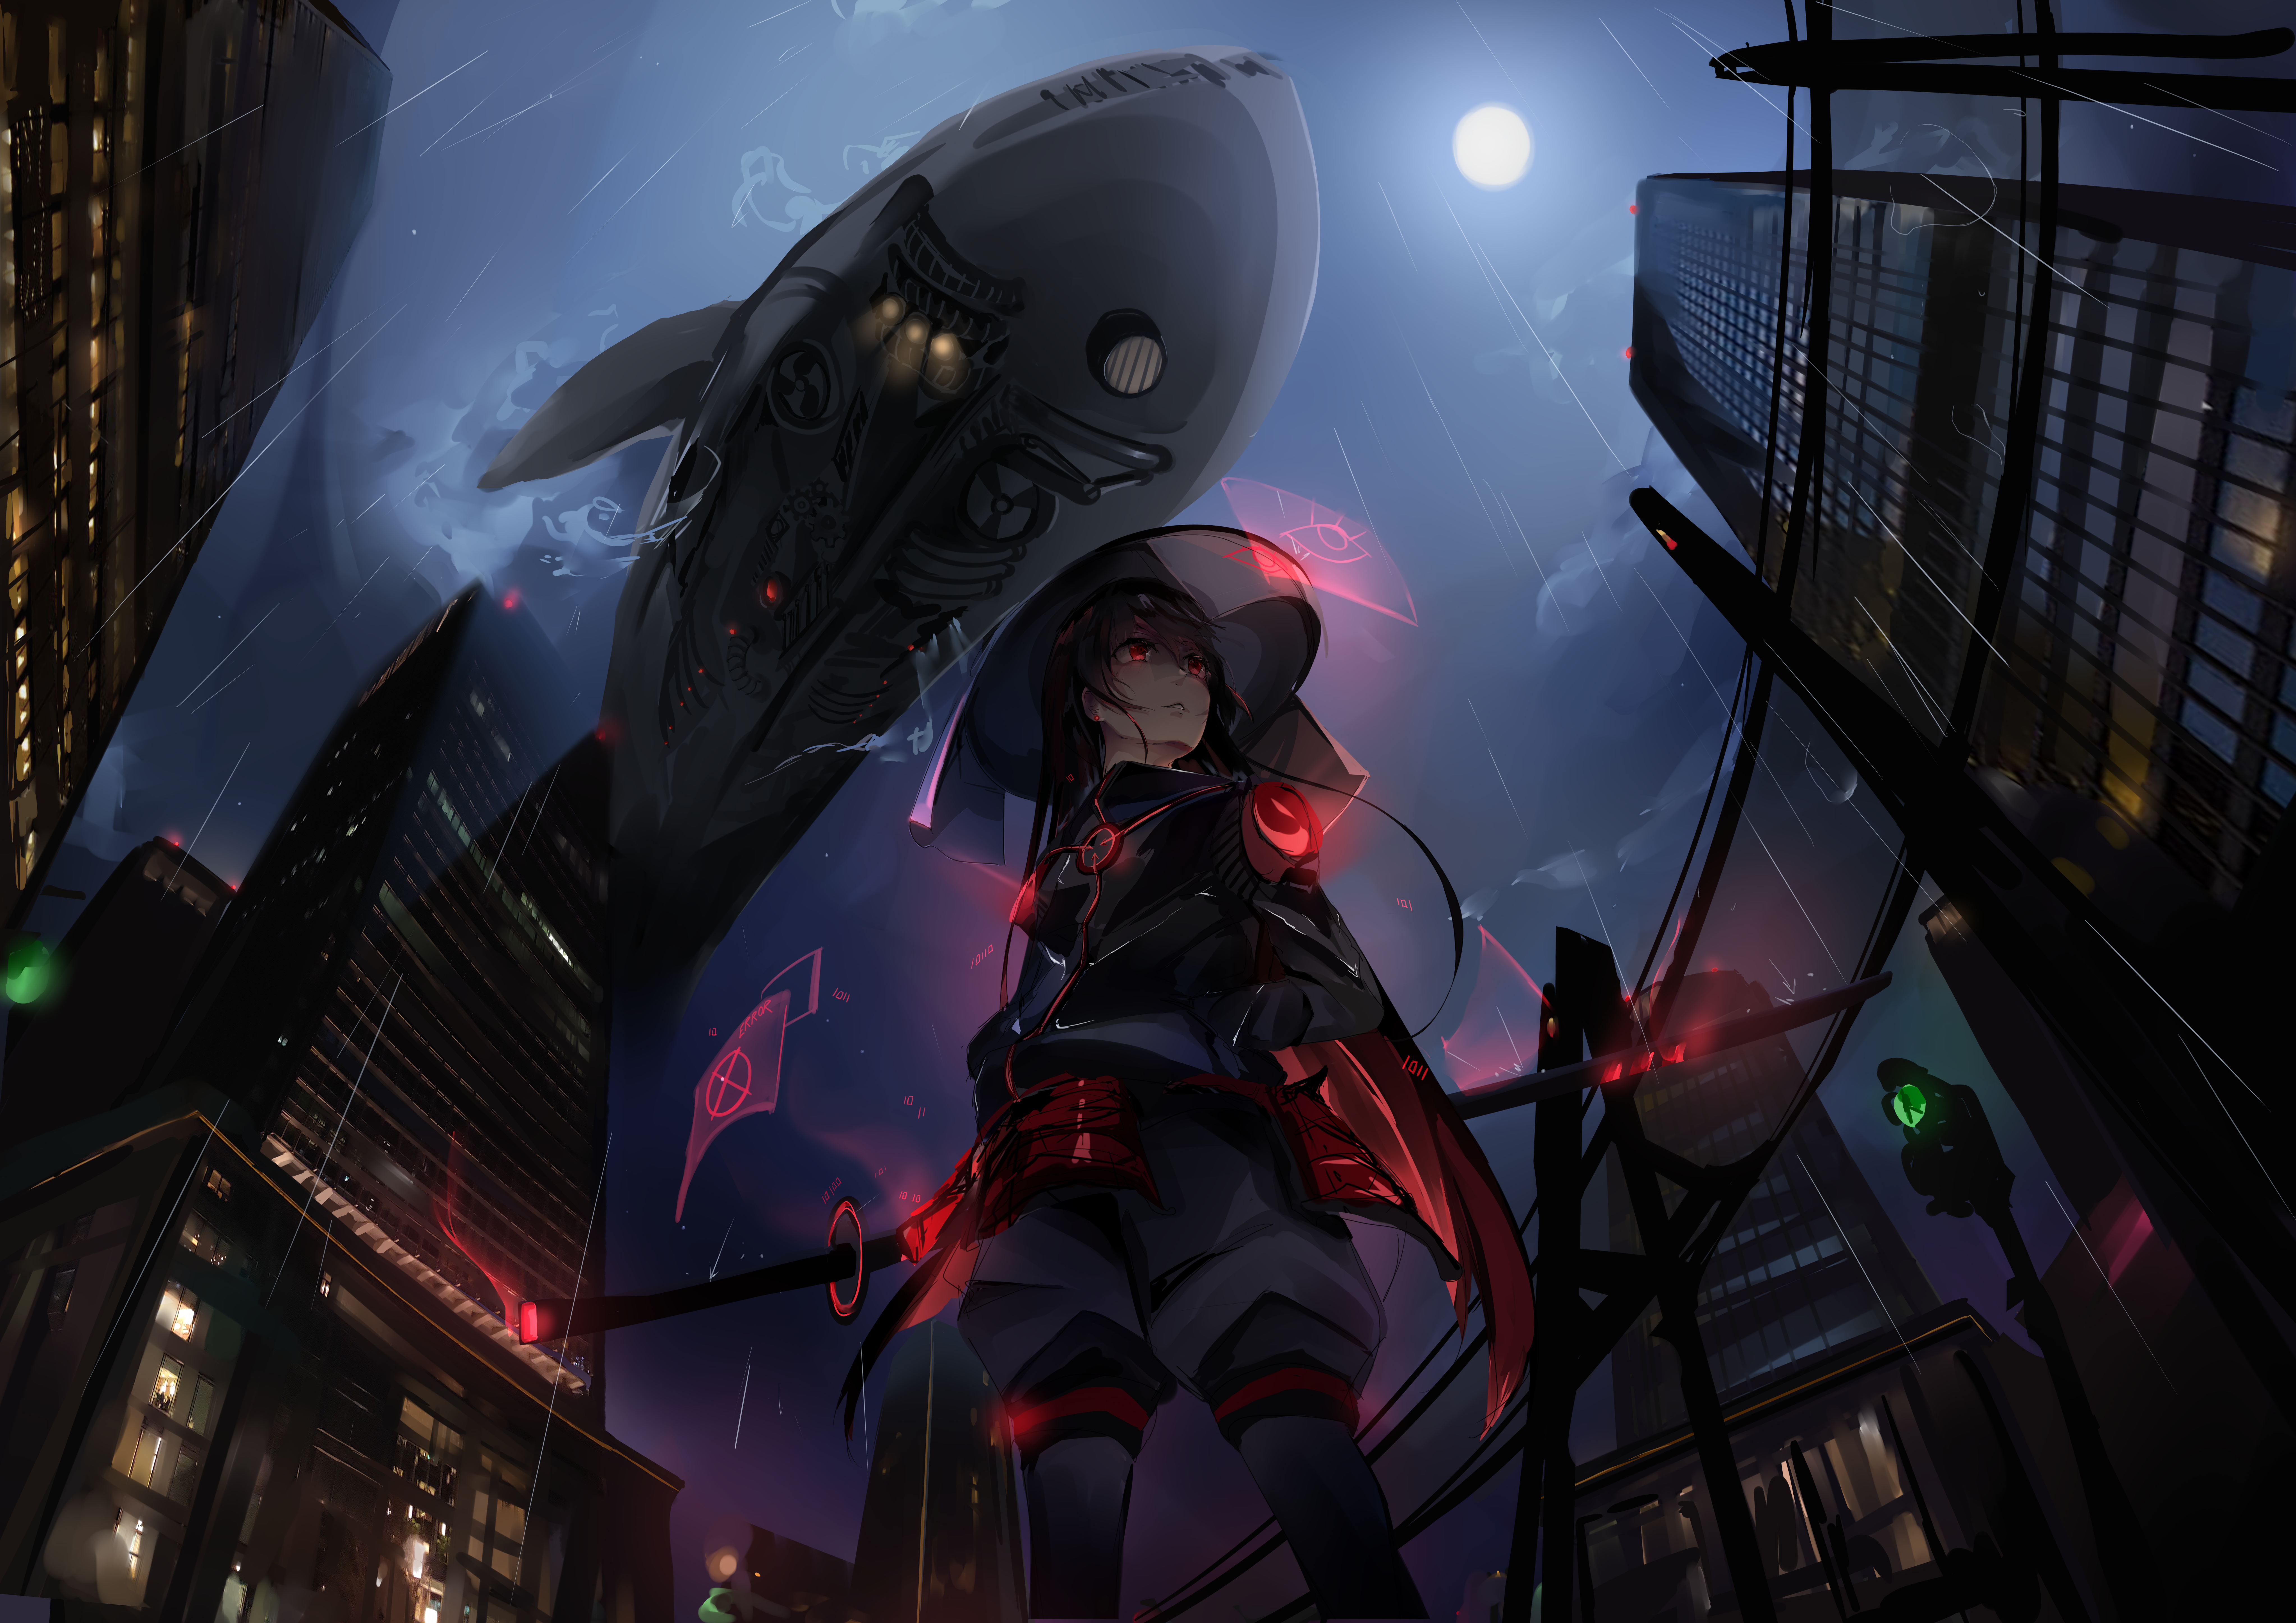 Anime 8185x5787 sword katana Moon weapon Zeppelin whale anime girls dark background neon dark hair city cyberpunk futuristic city low-angle